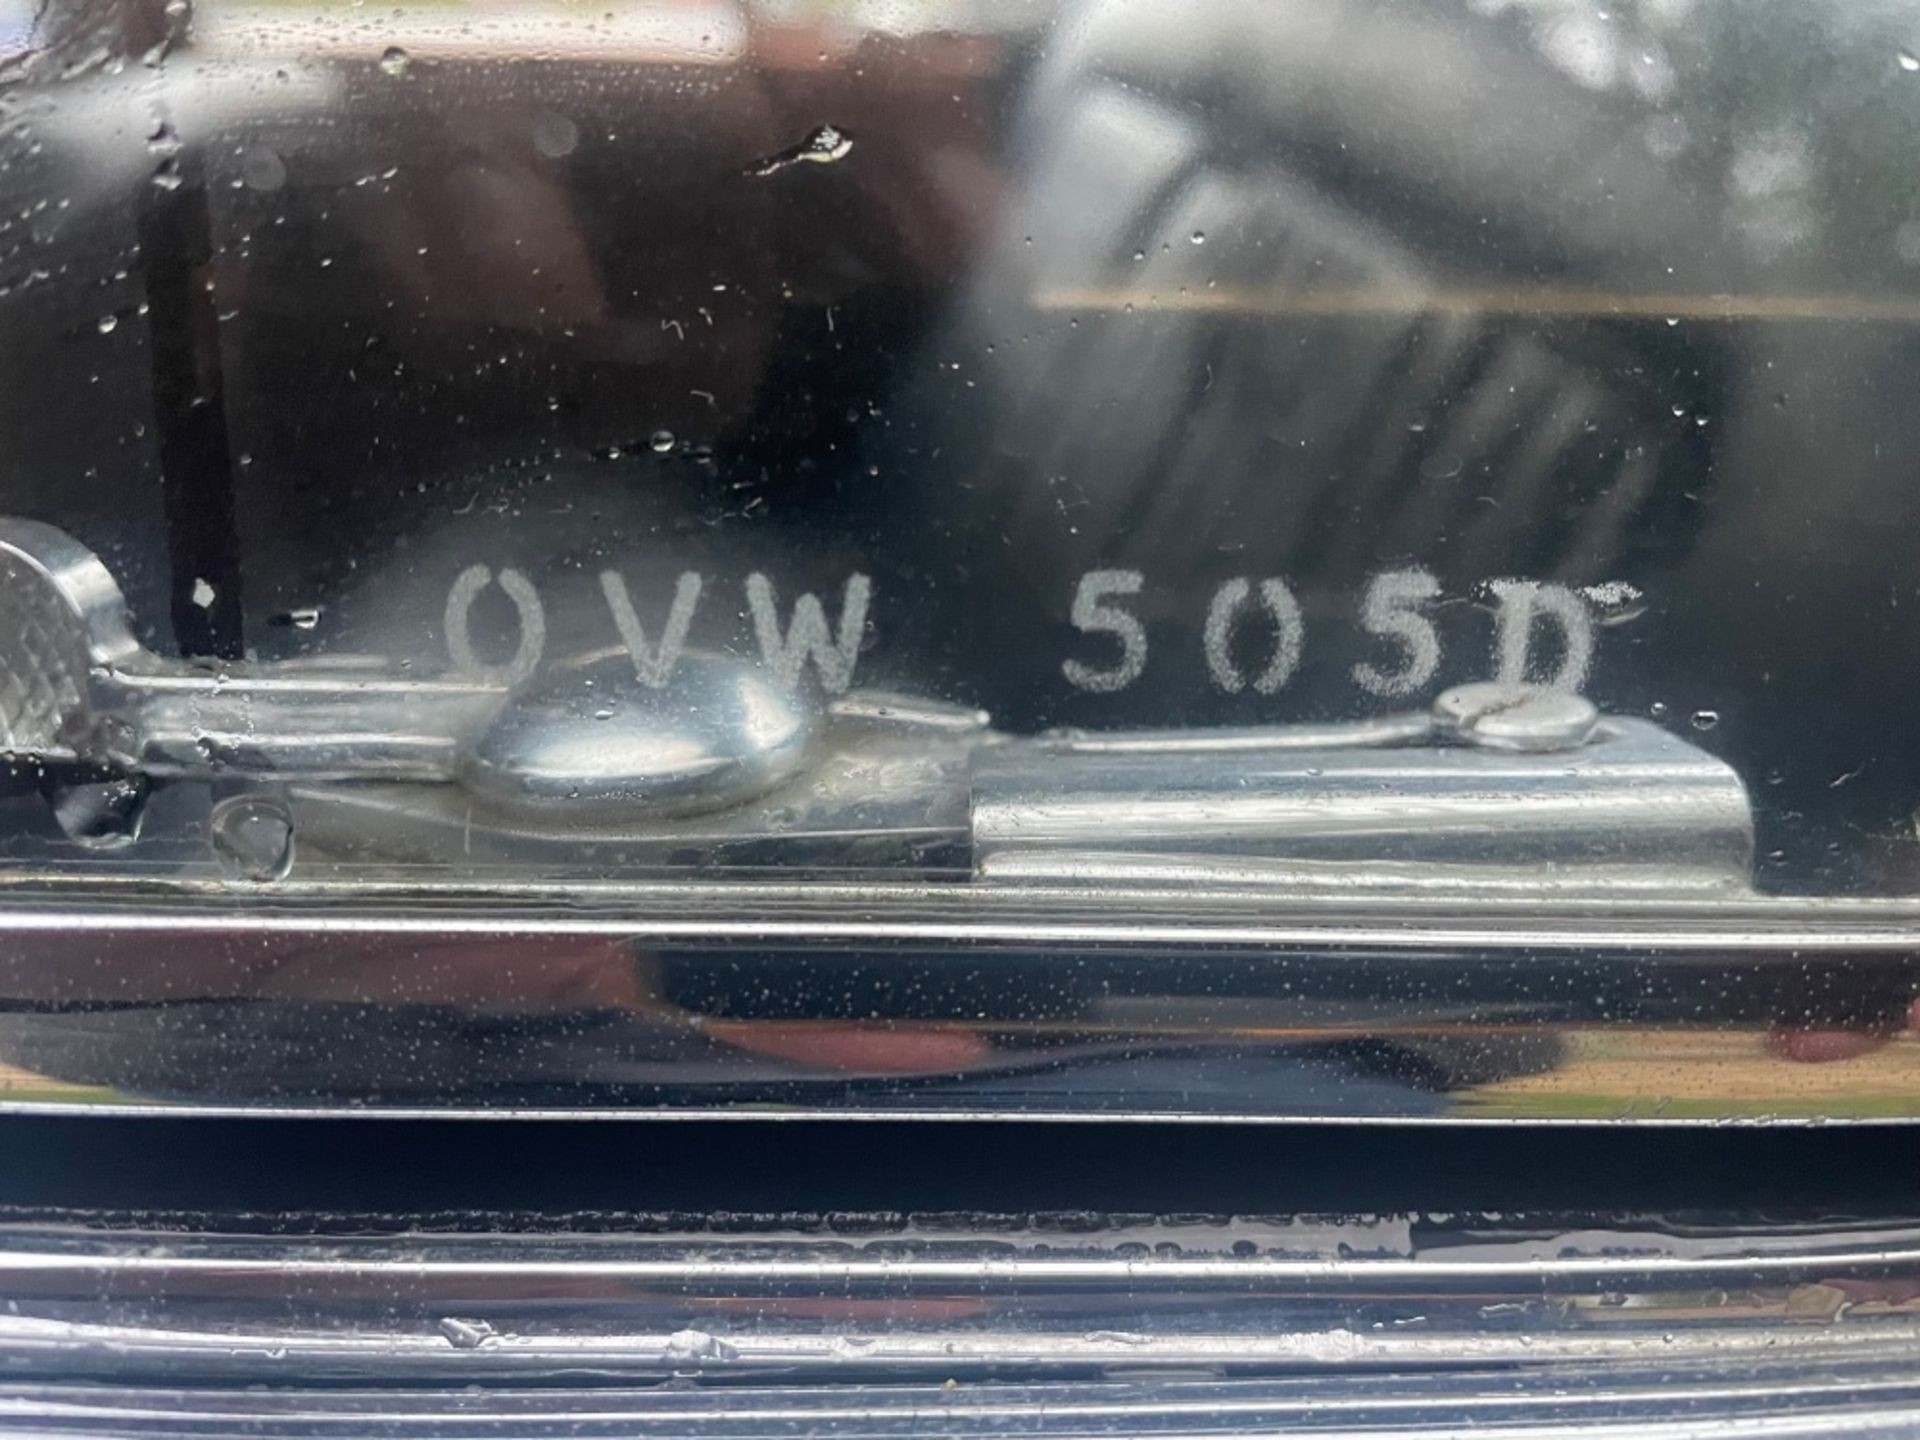 1965 JAGUAR MARK II 3.4 SALOON Registration Number: OVW 505D Chassis Number: 170007DN Recorded - Image 11 of 12